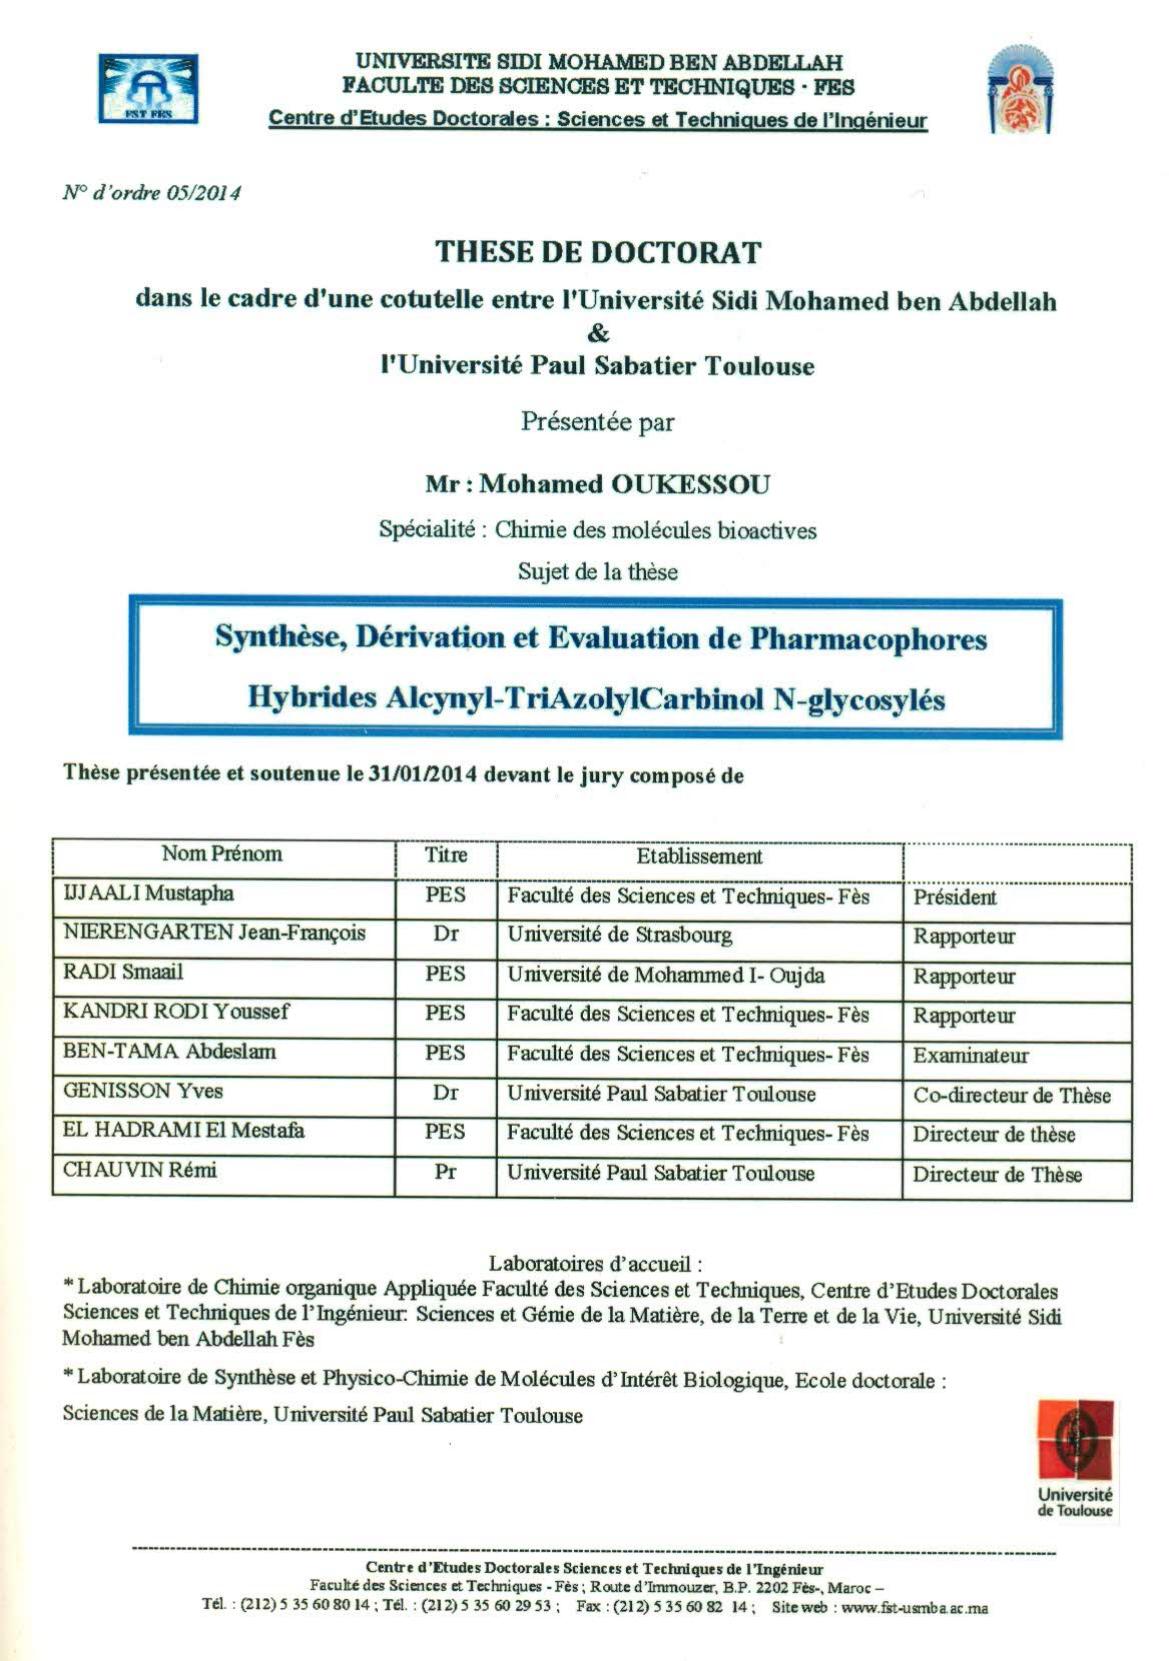 Synthèse, Dérivation et Evaluation de Pharmacophores Hybrides Alcynyl-TriAzolylCarbinol N-glycosylés